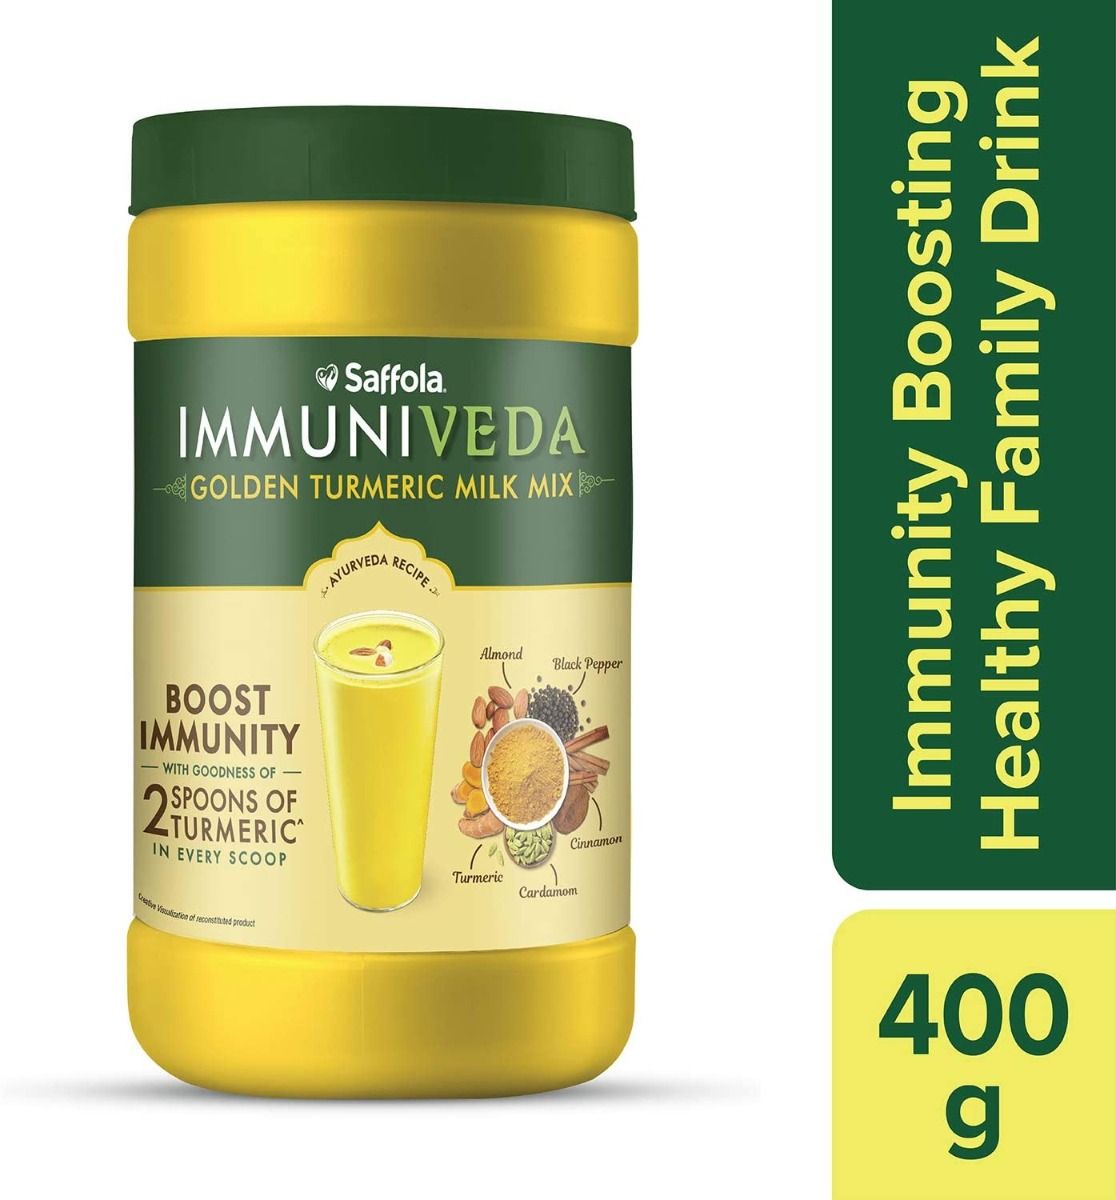 Saffola Immuniveda Golden Turmeric Milk Mix, 400 gm, Pack of 1 